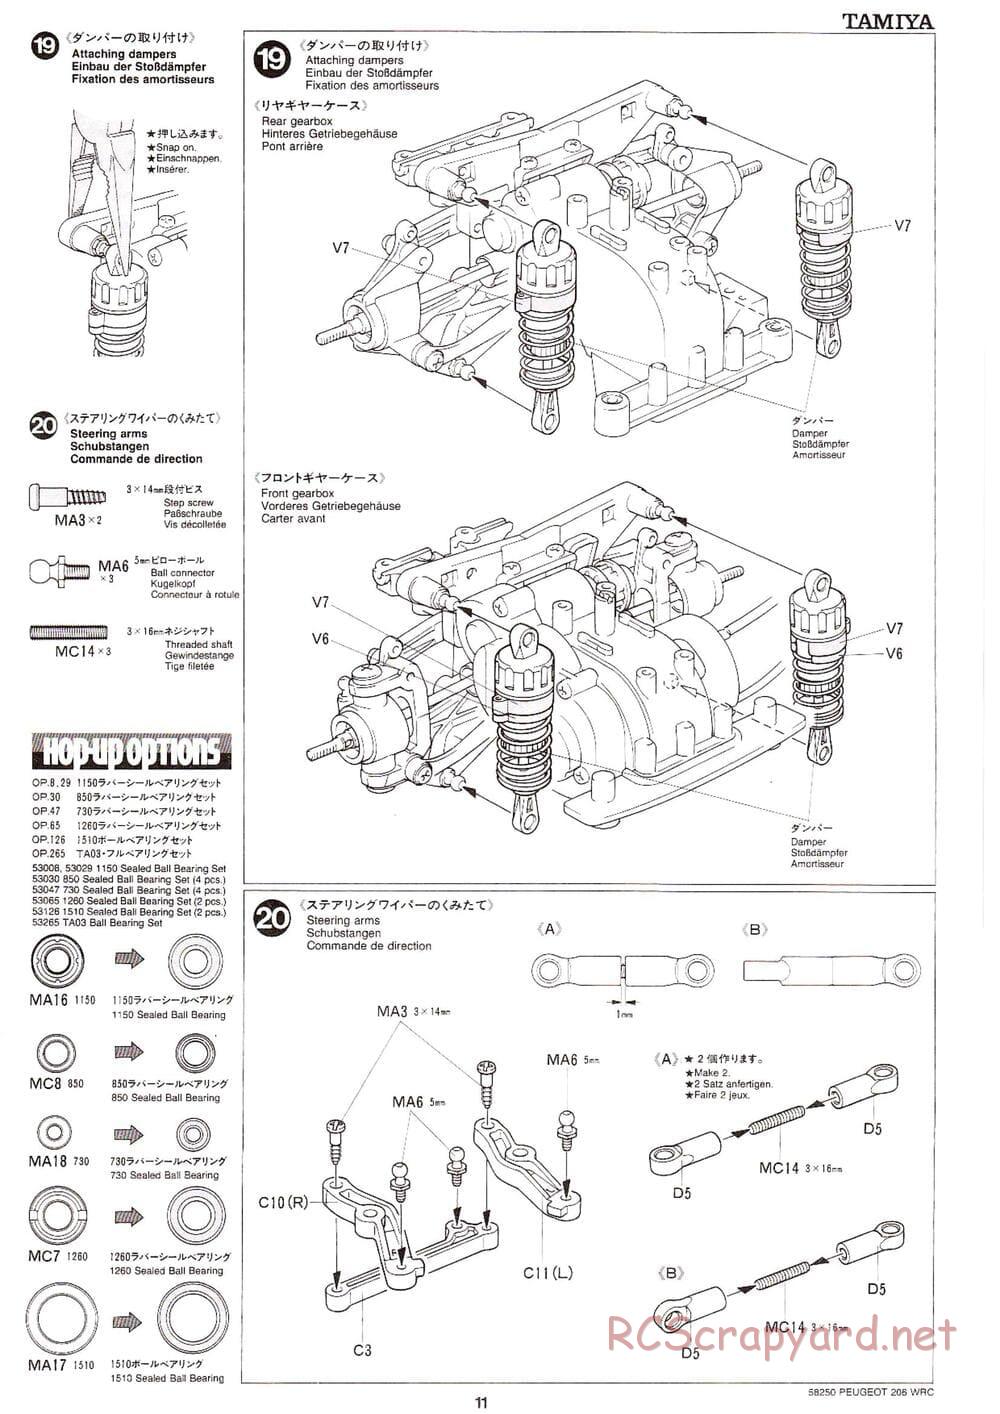 Tamiya - Peugeot 206 WRC - TA-03FS Chassis - Manual - Page 11